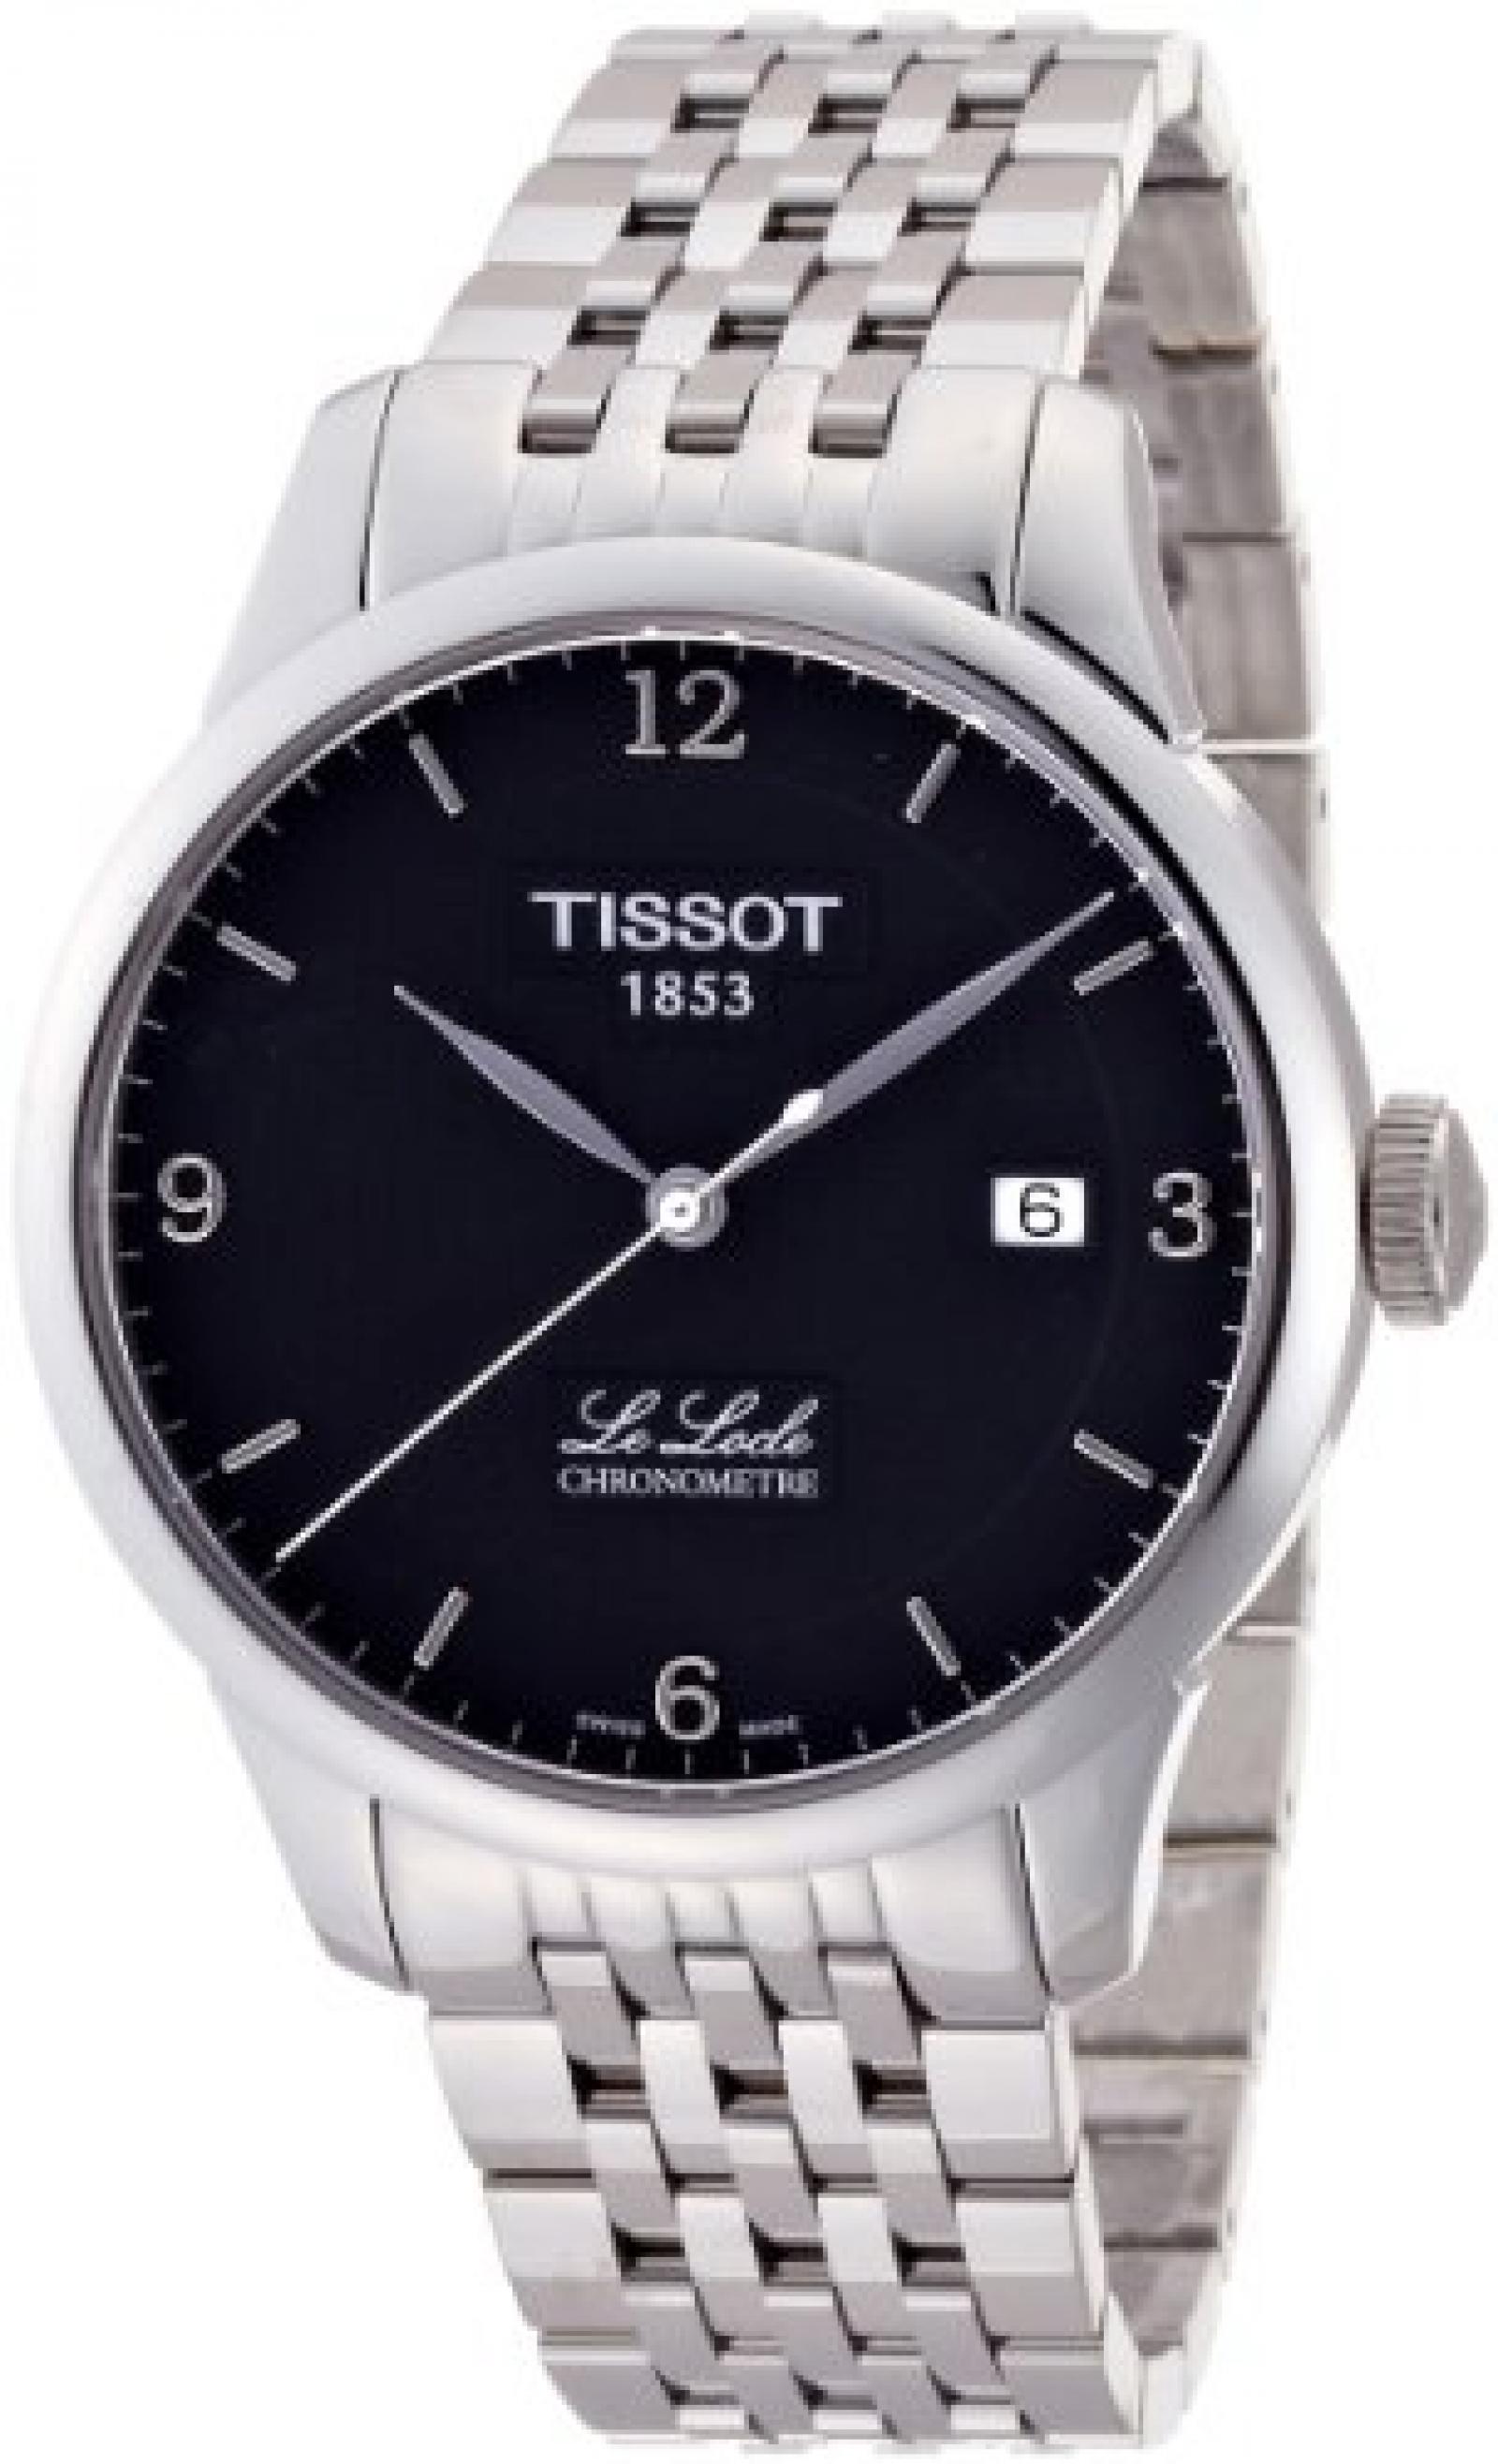 Tissot T-Classic Le Locle Automatic COSC Chronometer T006.408.11.057.00 